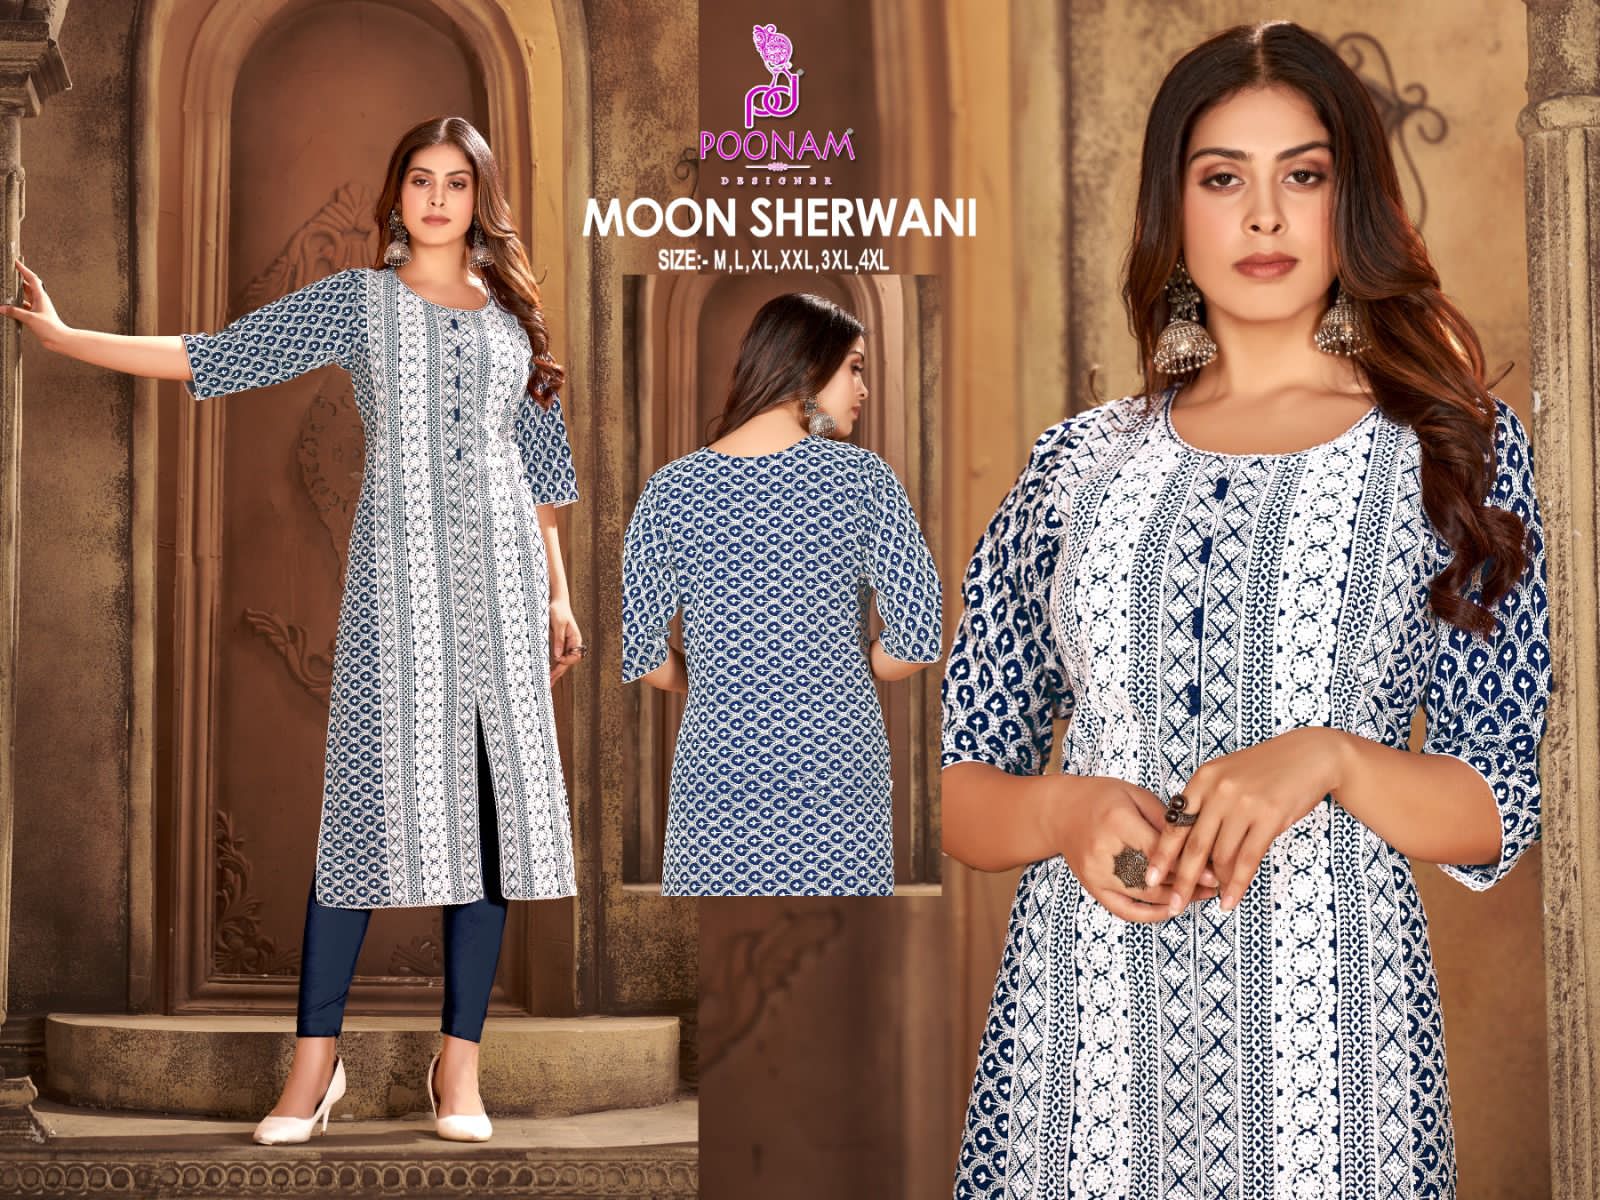 Poonam Moon Sherwani collection 7